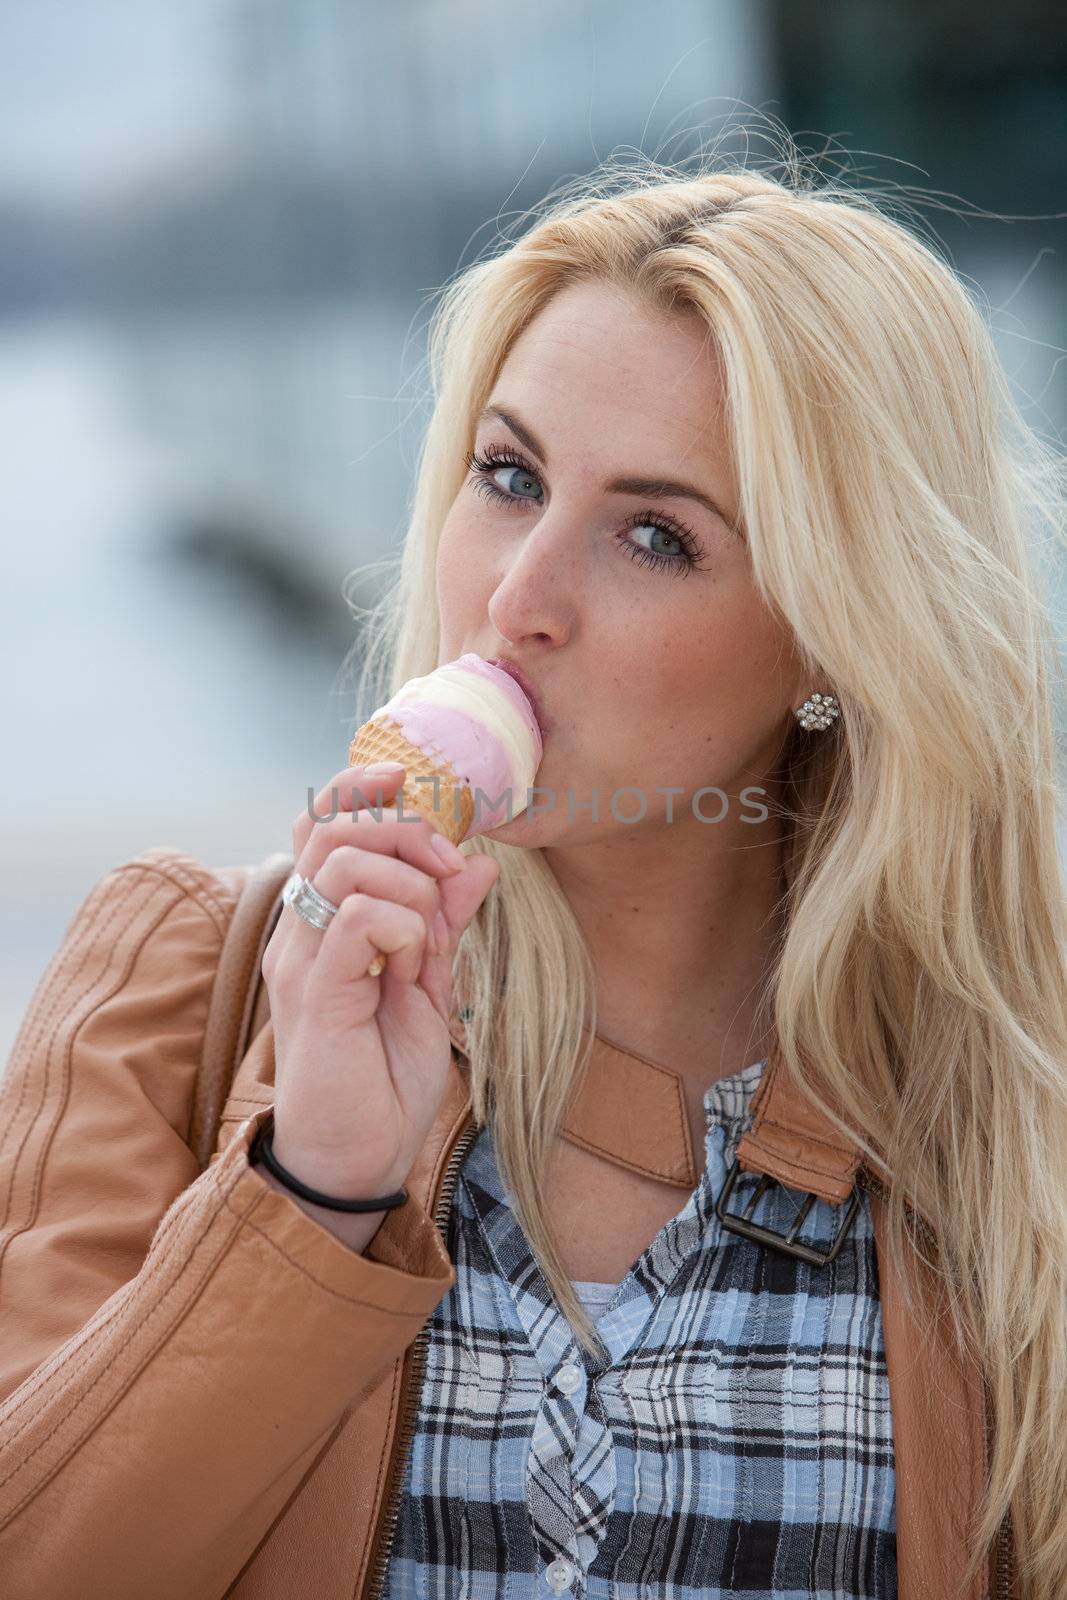 Enjoying her icecream by Fotosmurf